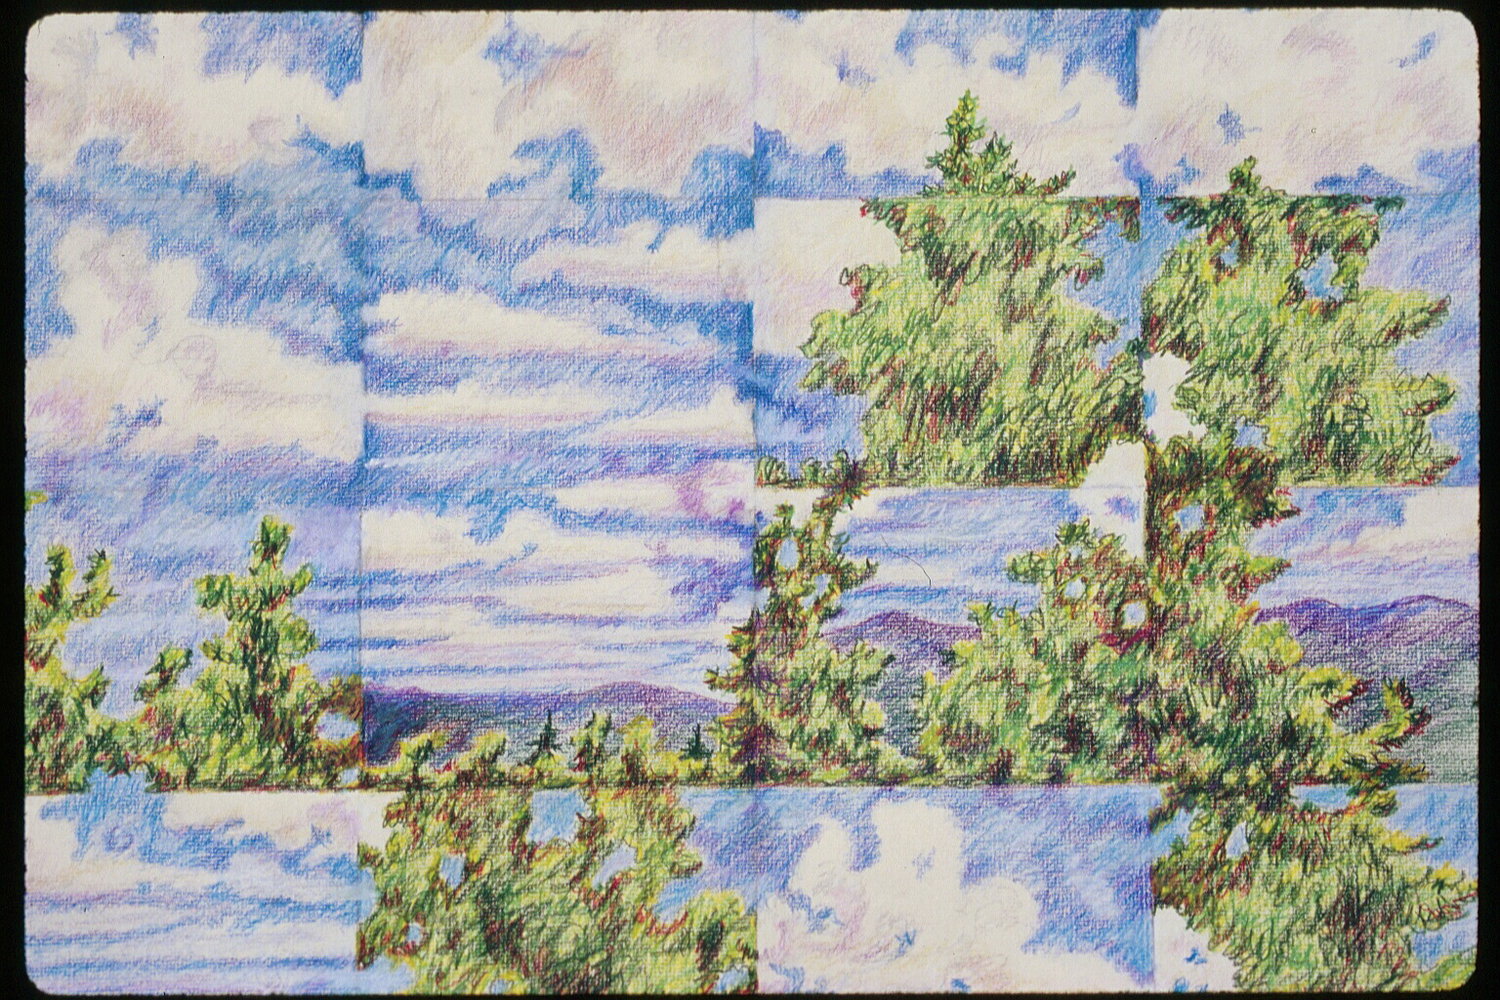 Cloud Scape, colored pencil, 18 x 24